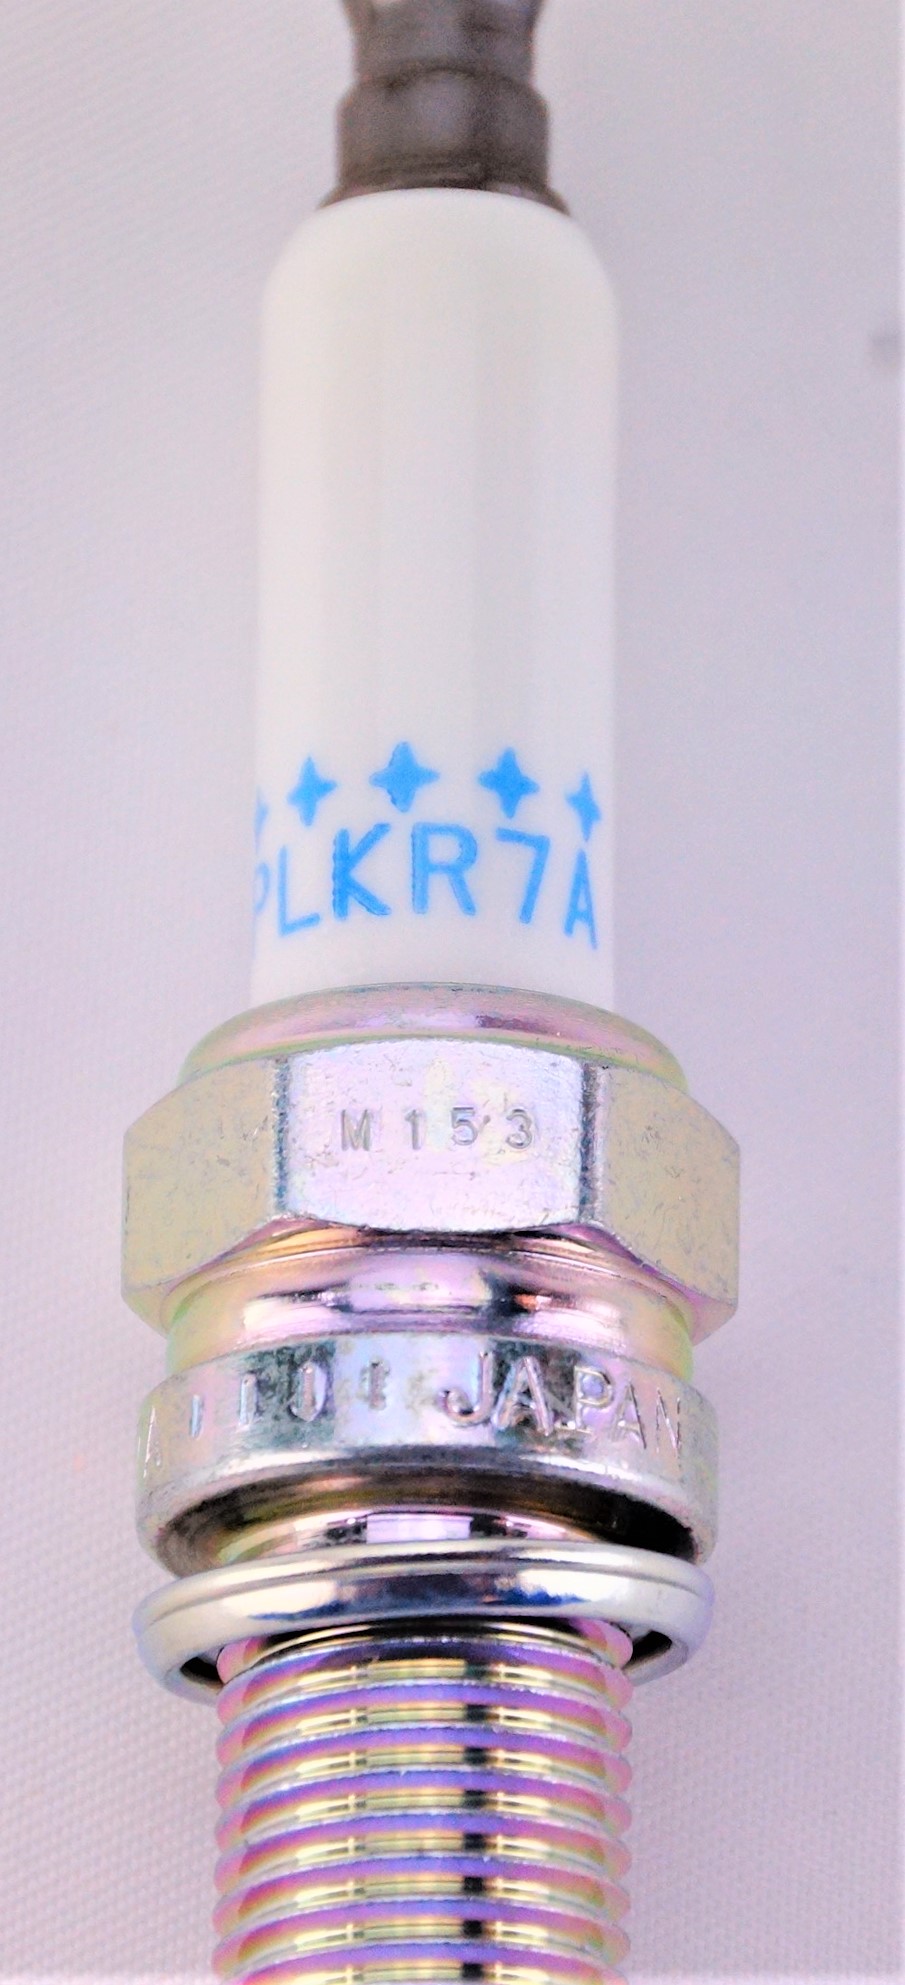 Set of 8 NGK 4288 PLKR7A Premium Laser Platinum Spark Plugs Fast Free Shipping - image 6